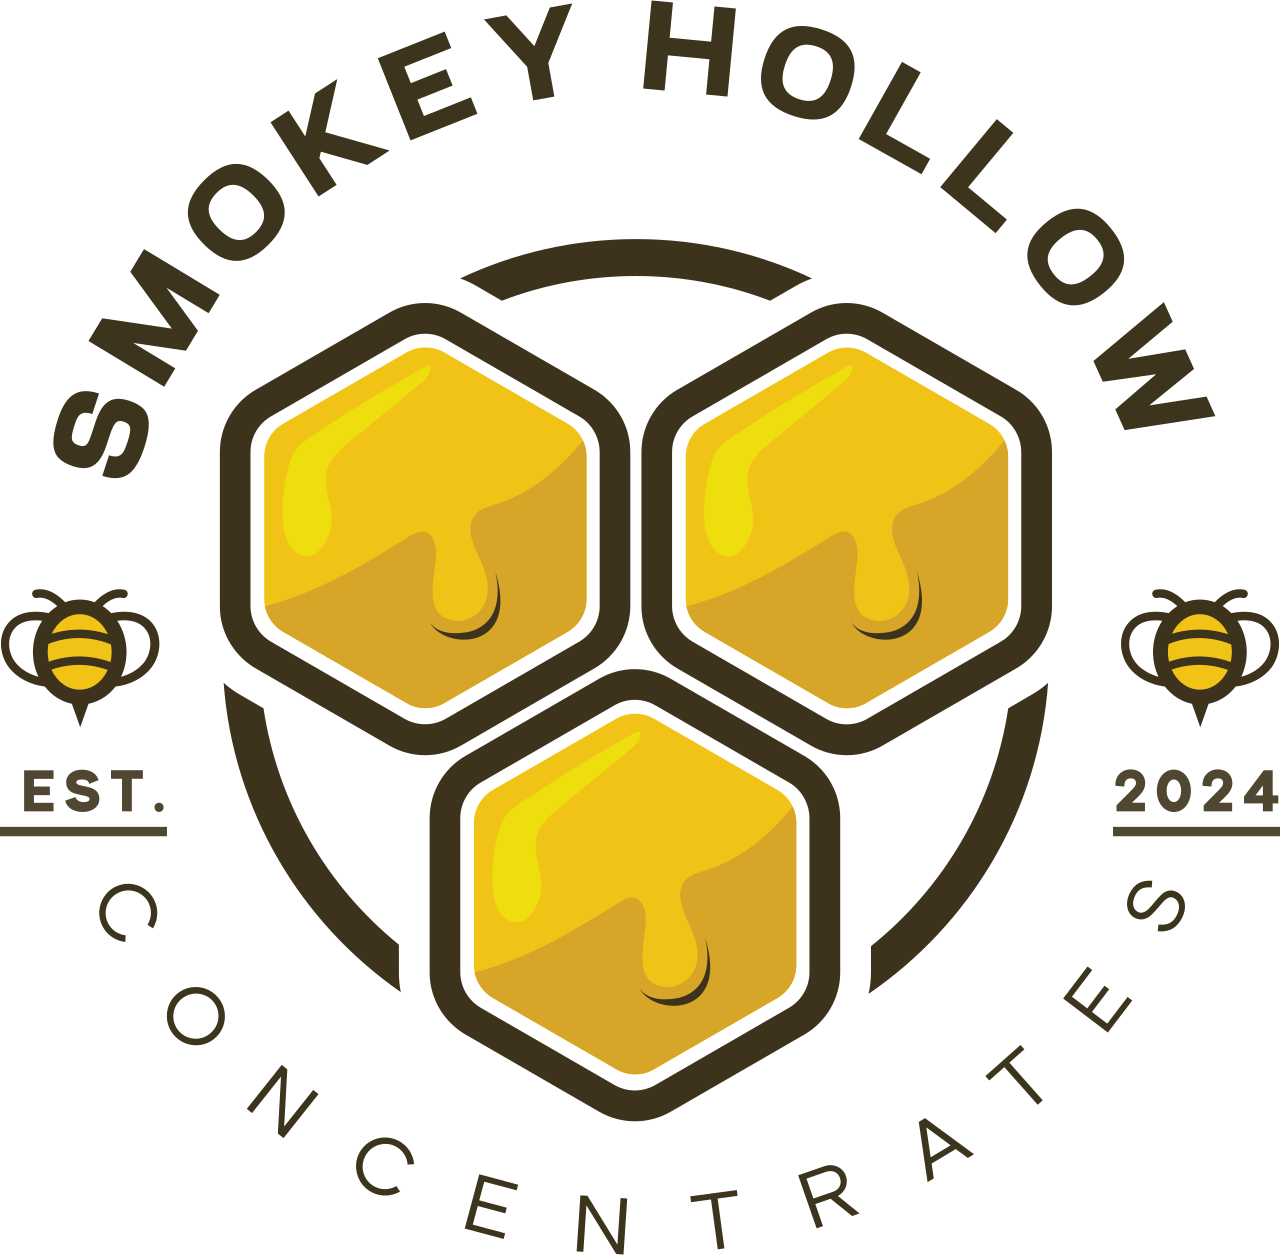 Smokey Hollow 's logo